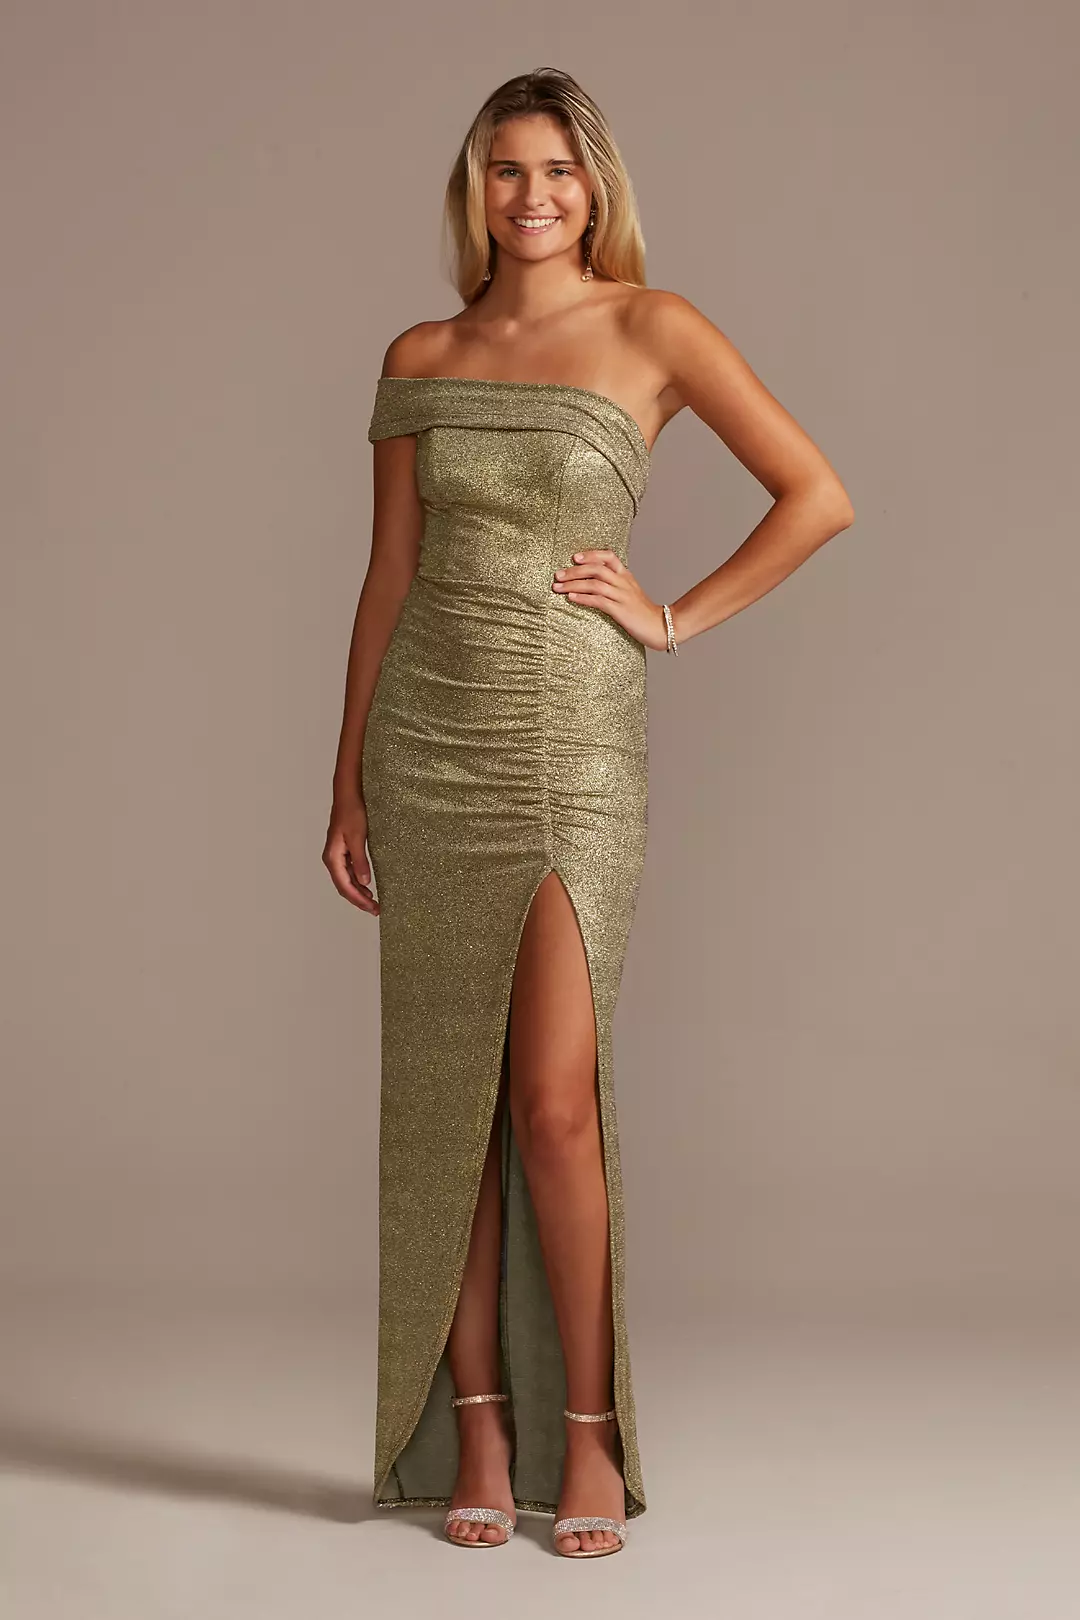 One Shoulder Metallic Ruched Dress with Skirt Slit Image